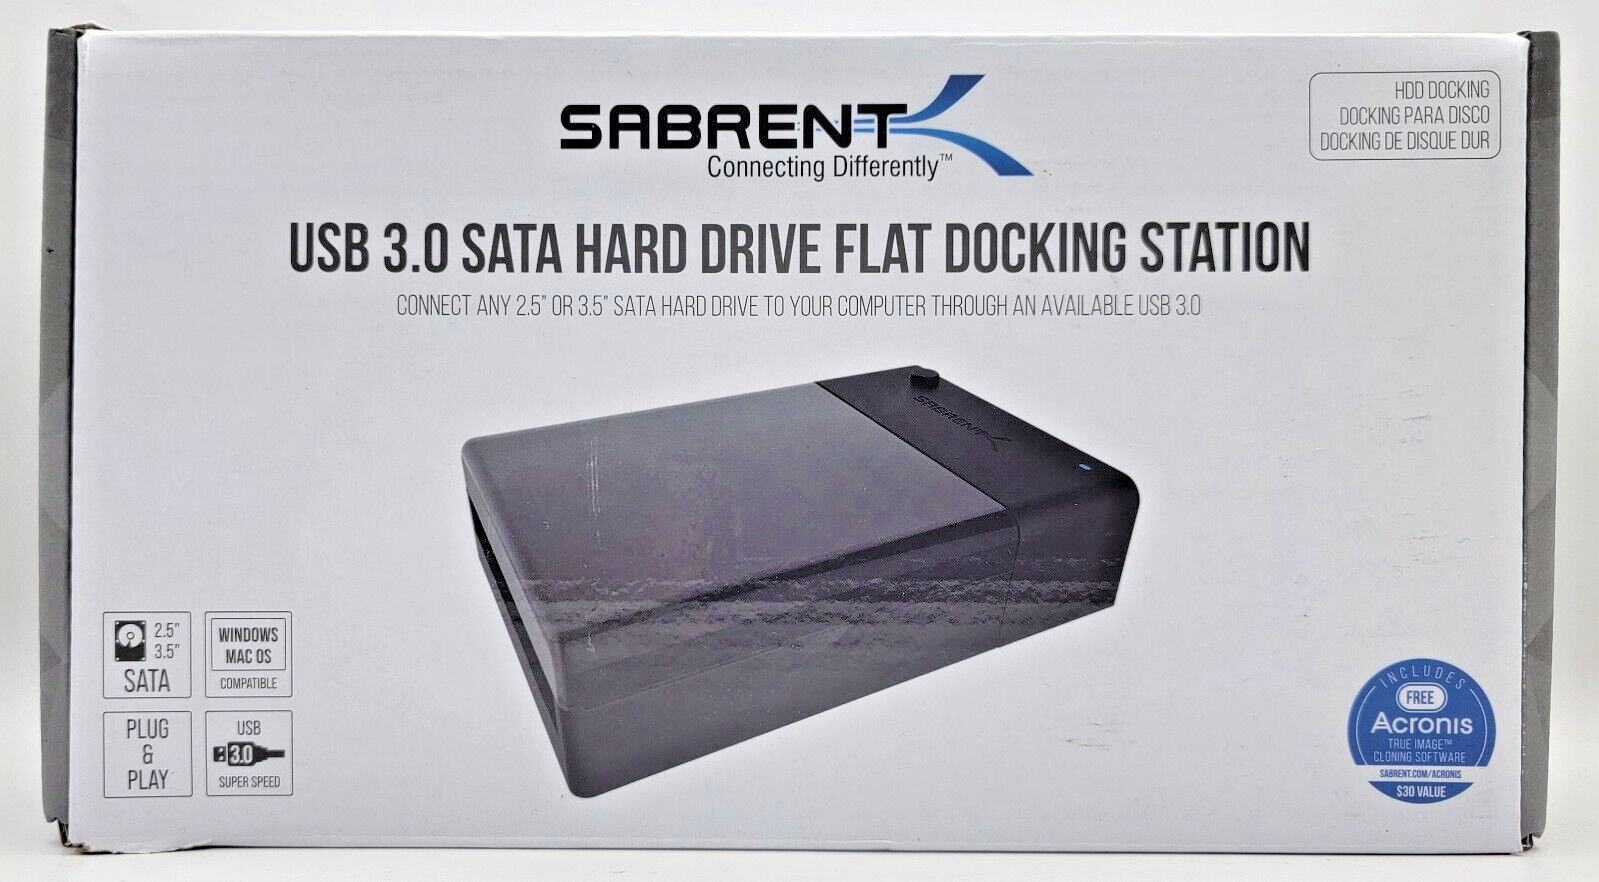 SABRENT USB 3.0 SATA Hard Drive Flat Docking Station EC-DFLT